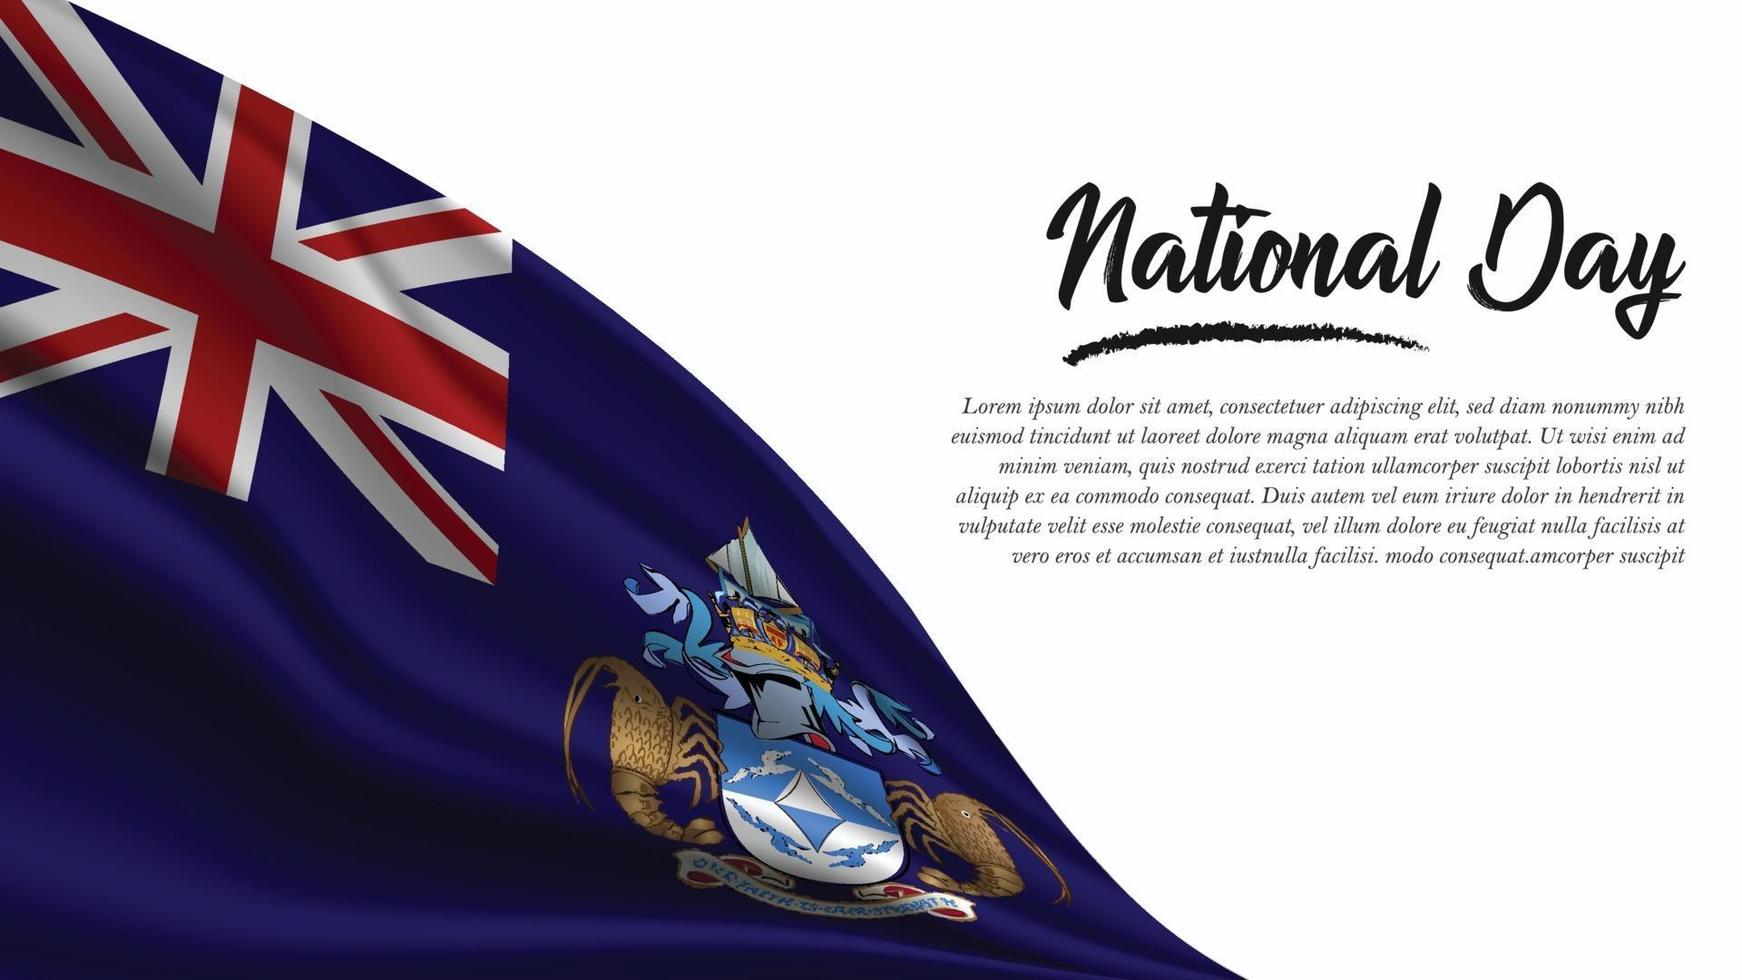 National Day Banner with Tristan da Cunha Flag background vector